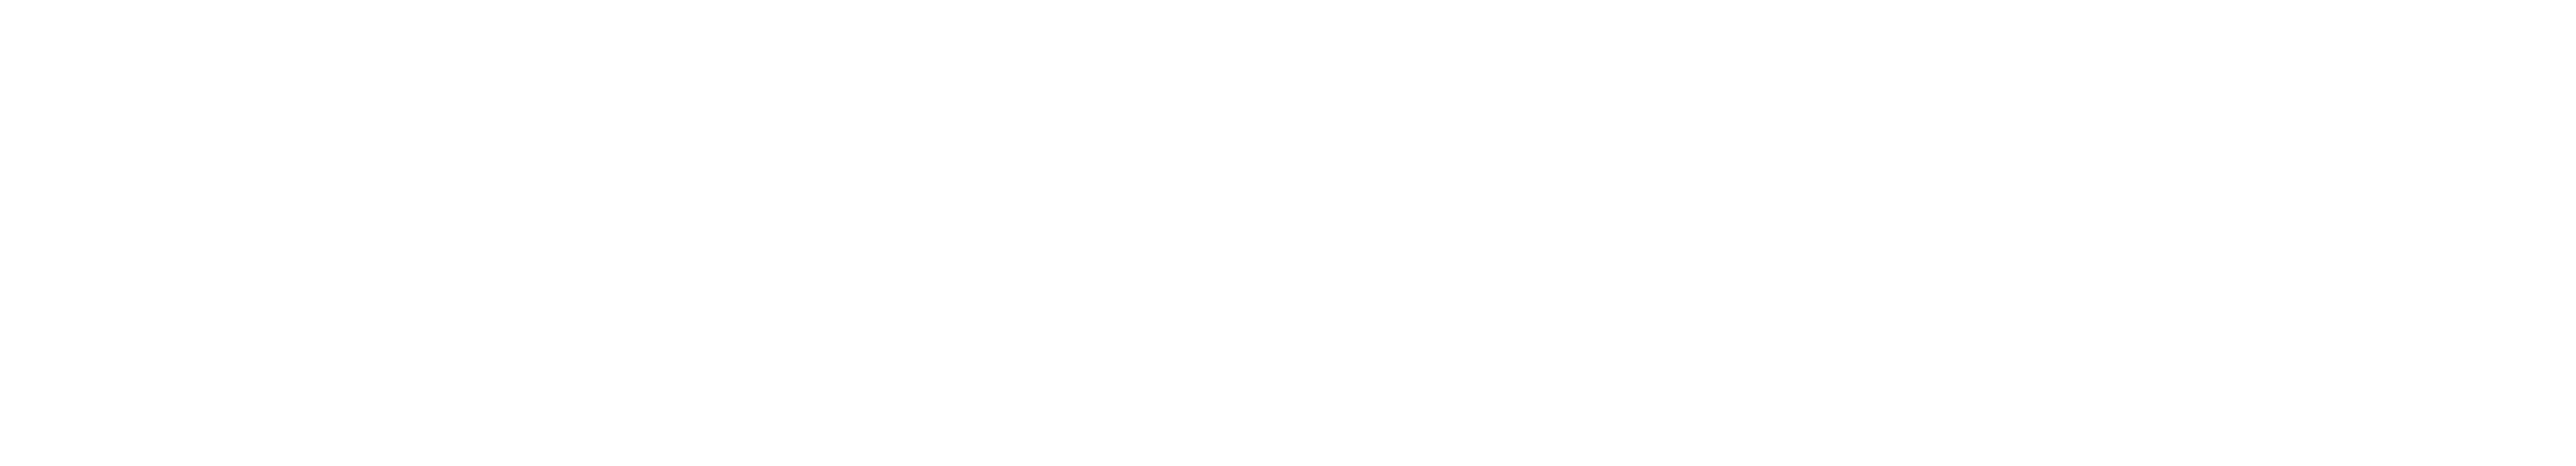 JiraAlign-logo-gradient-white-attribution_rgb@2x-05